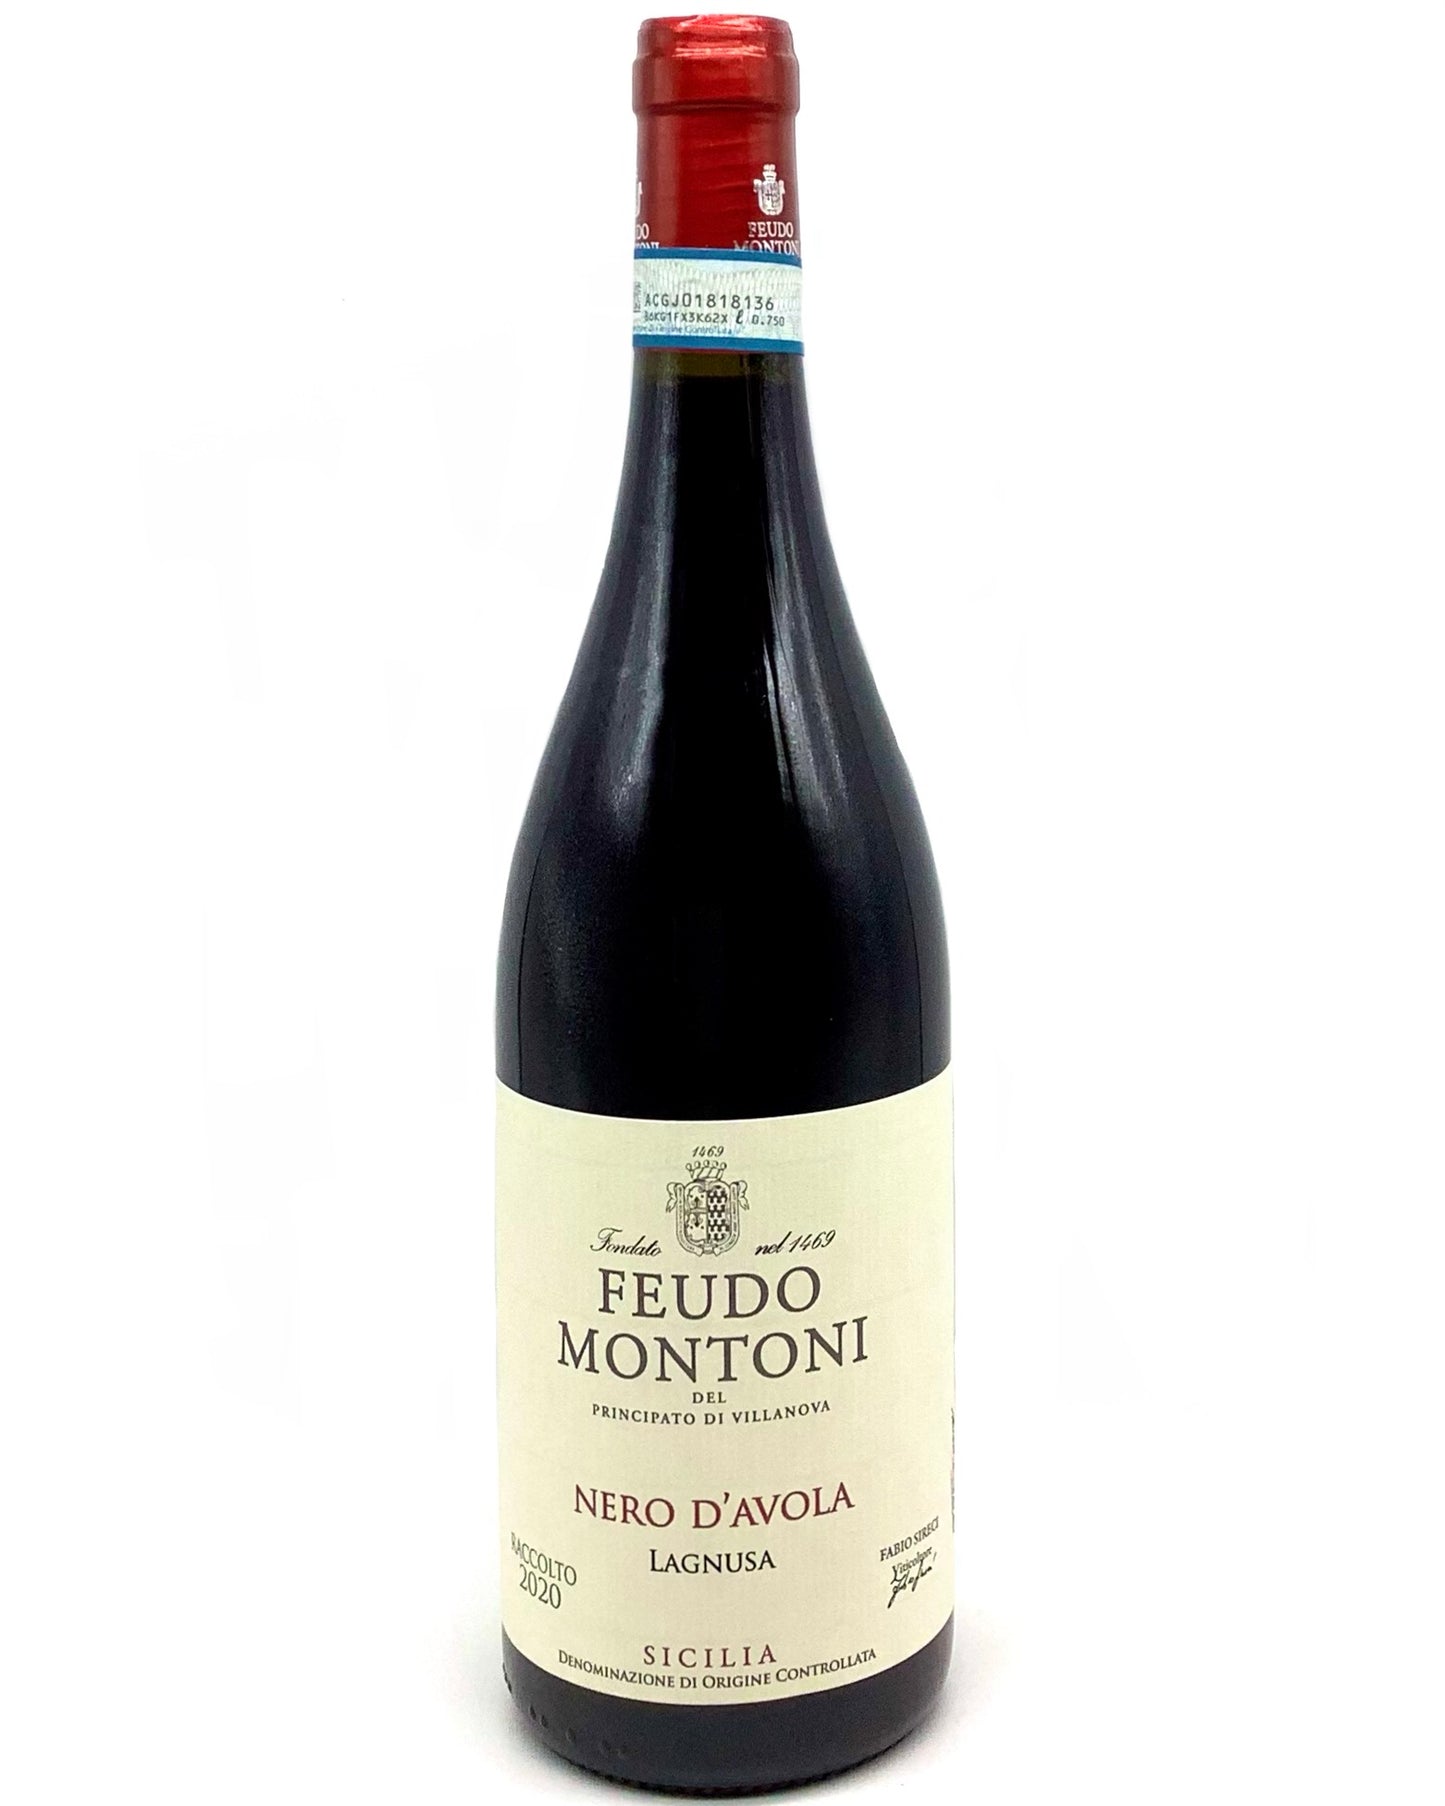 Feudo Montoni, Nero d'Avola "Lagnusa" Sicily, Italy 2020 organic